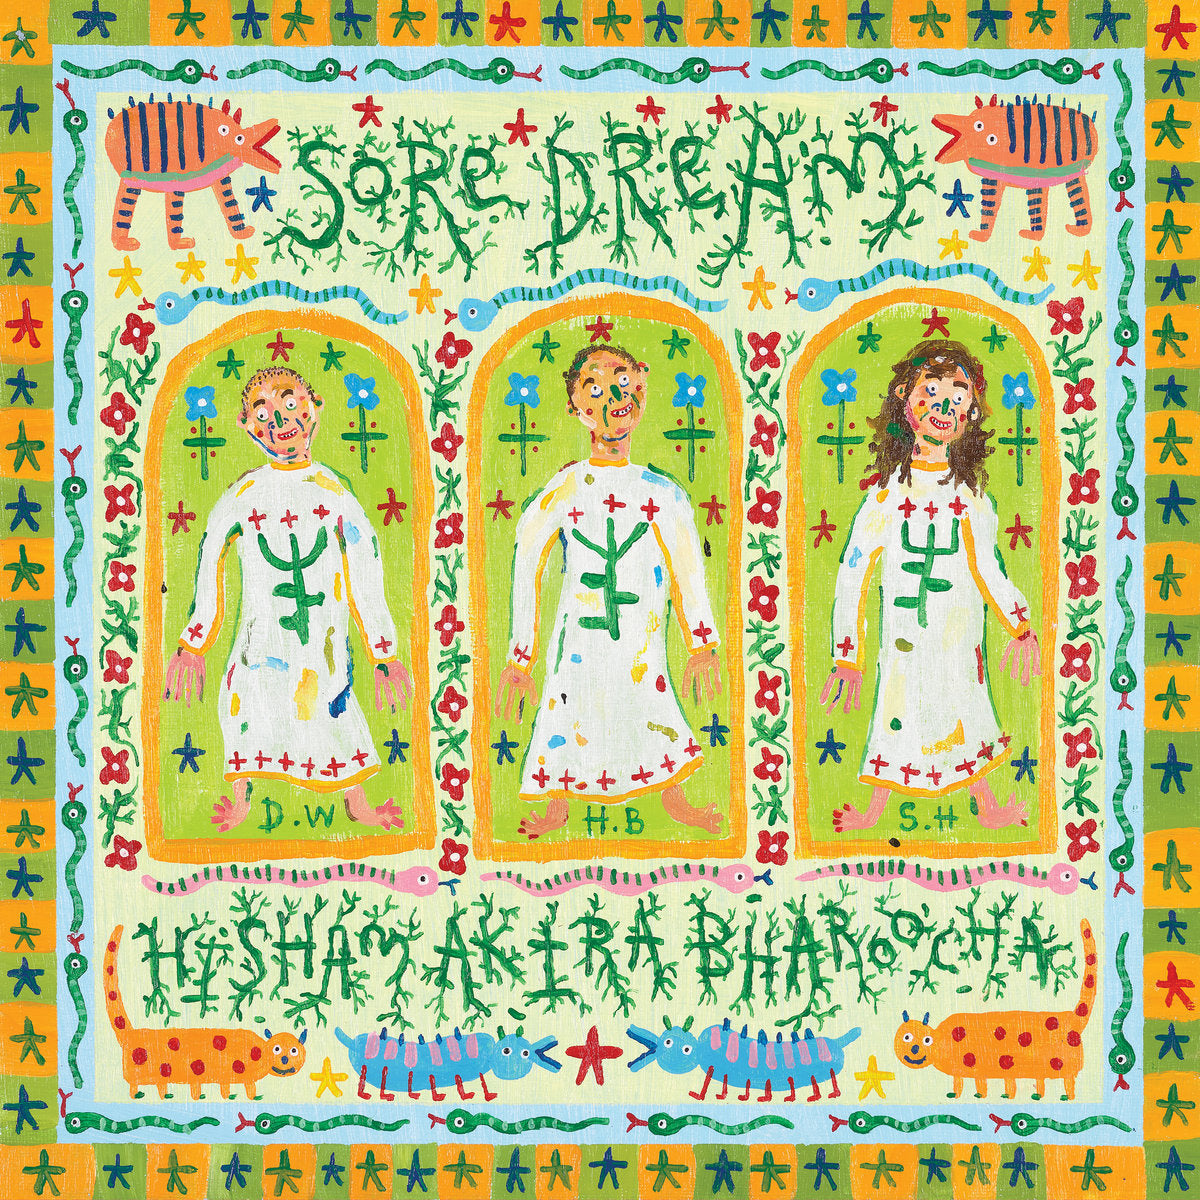 SORE DREAM & HISHAM AKIRA BHAROOCHA "Sore Dream & Hisham Akira Bharoocha" LP